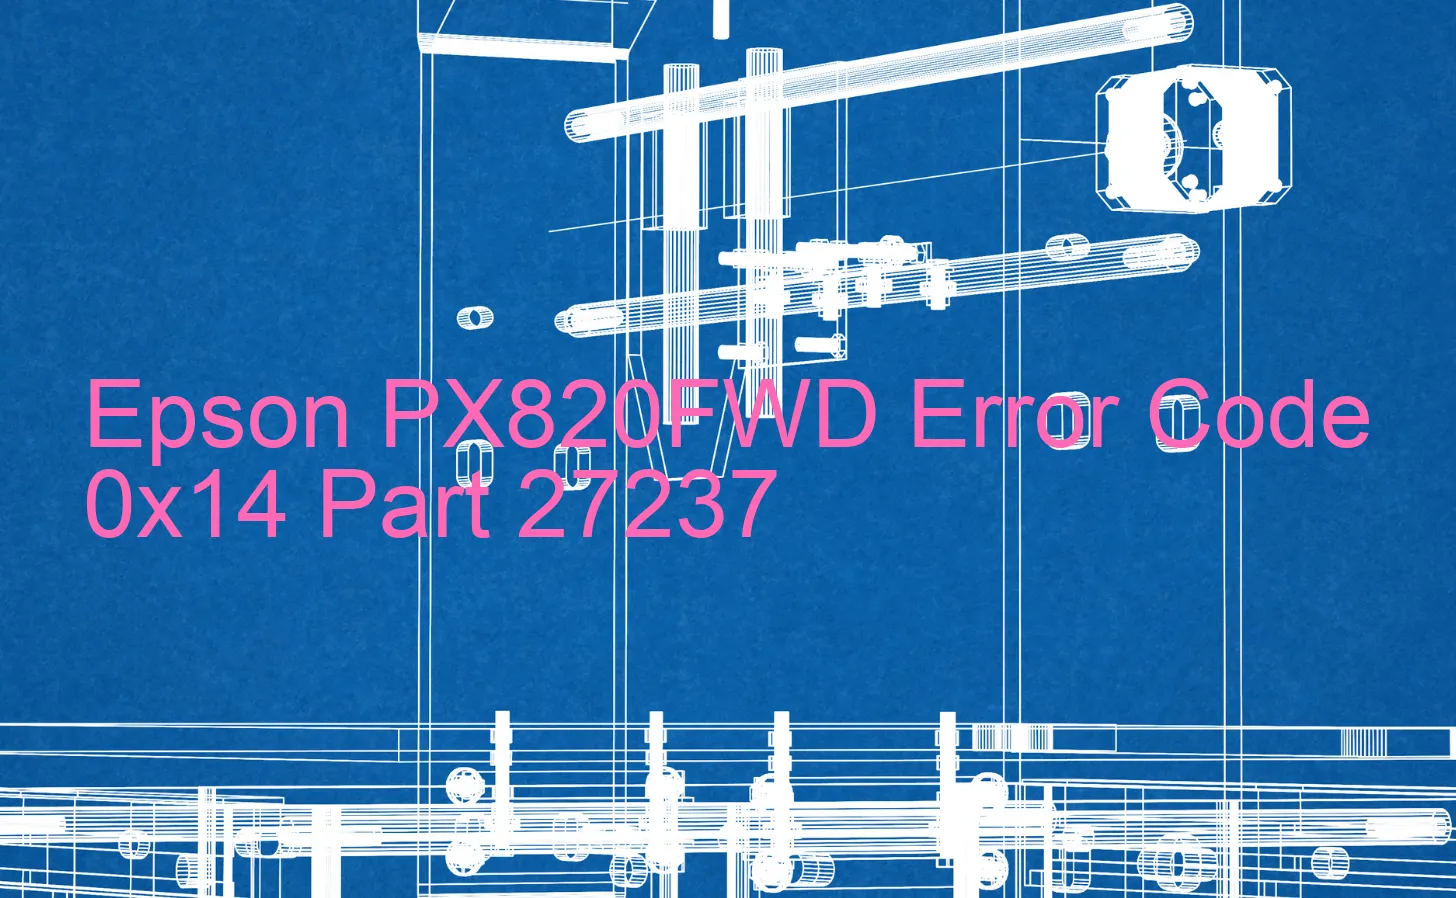 Epson PX820FWD Code d'erreur 0x14